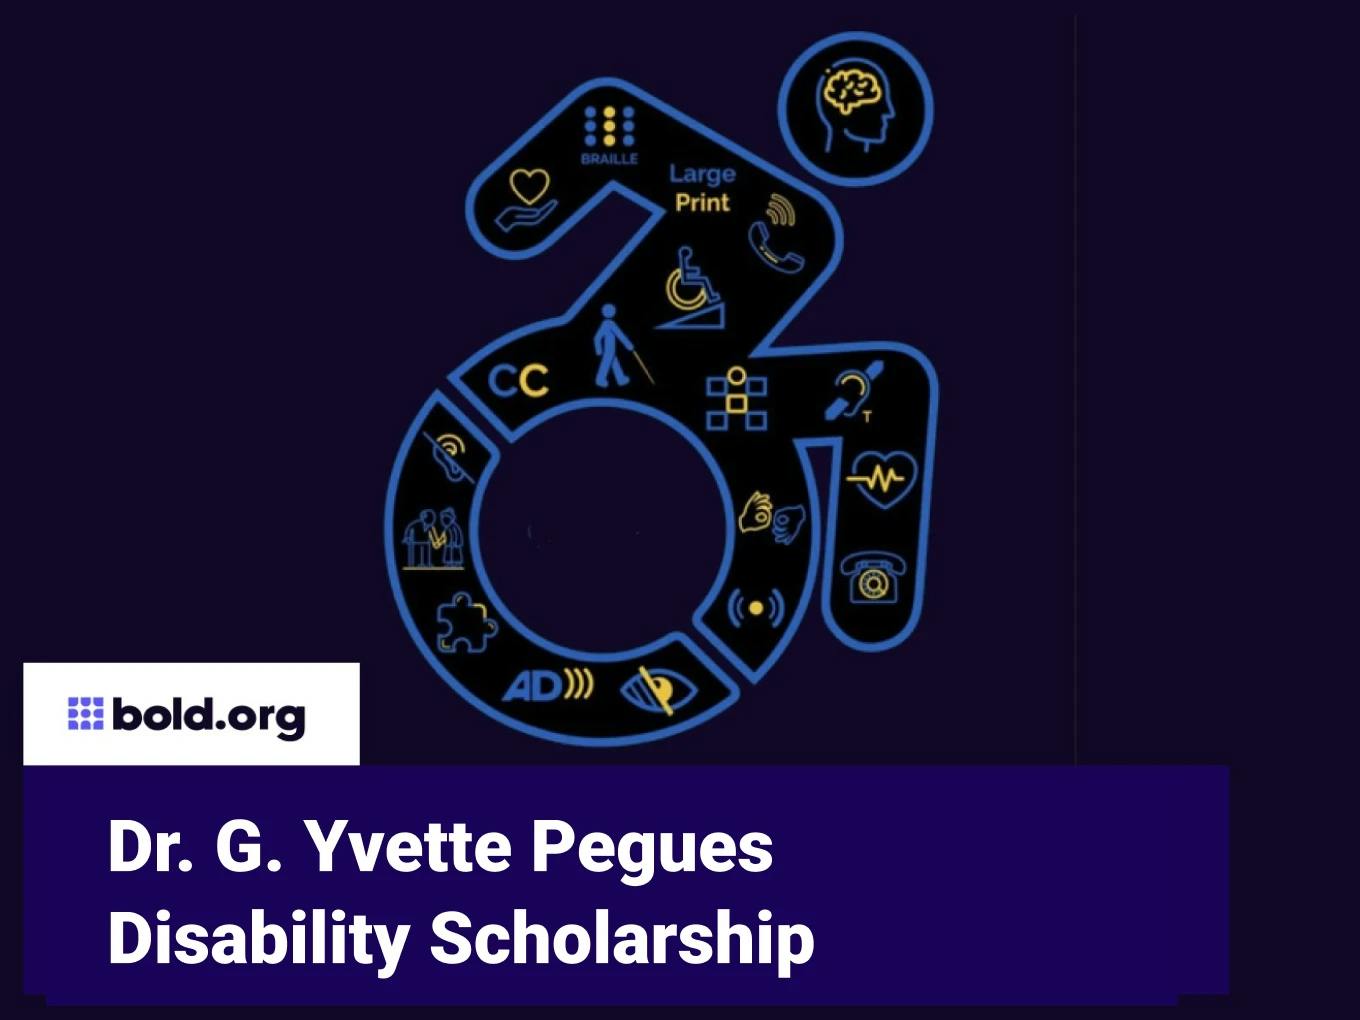 Dr. G. Yvette Pegues Disability Scholarship